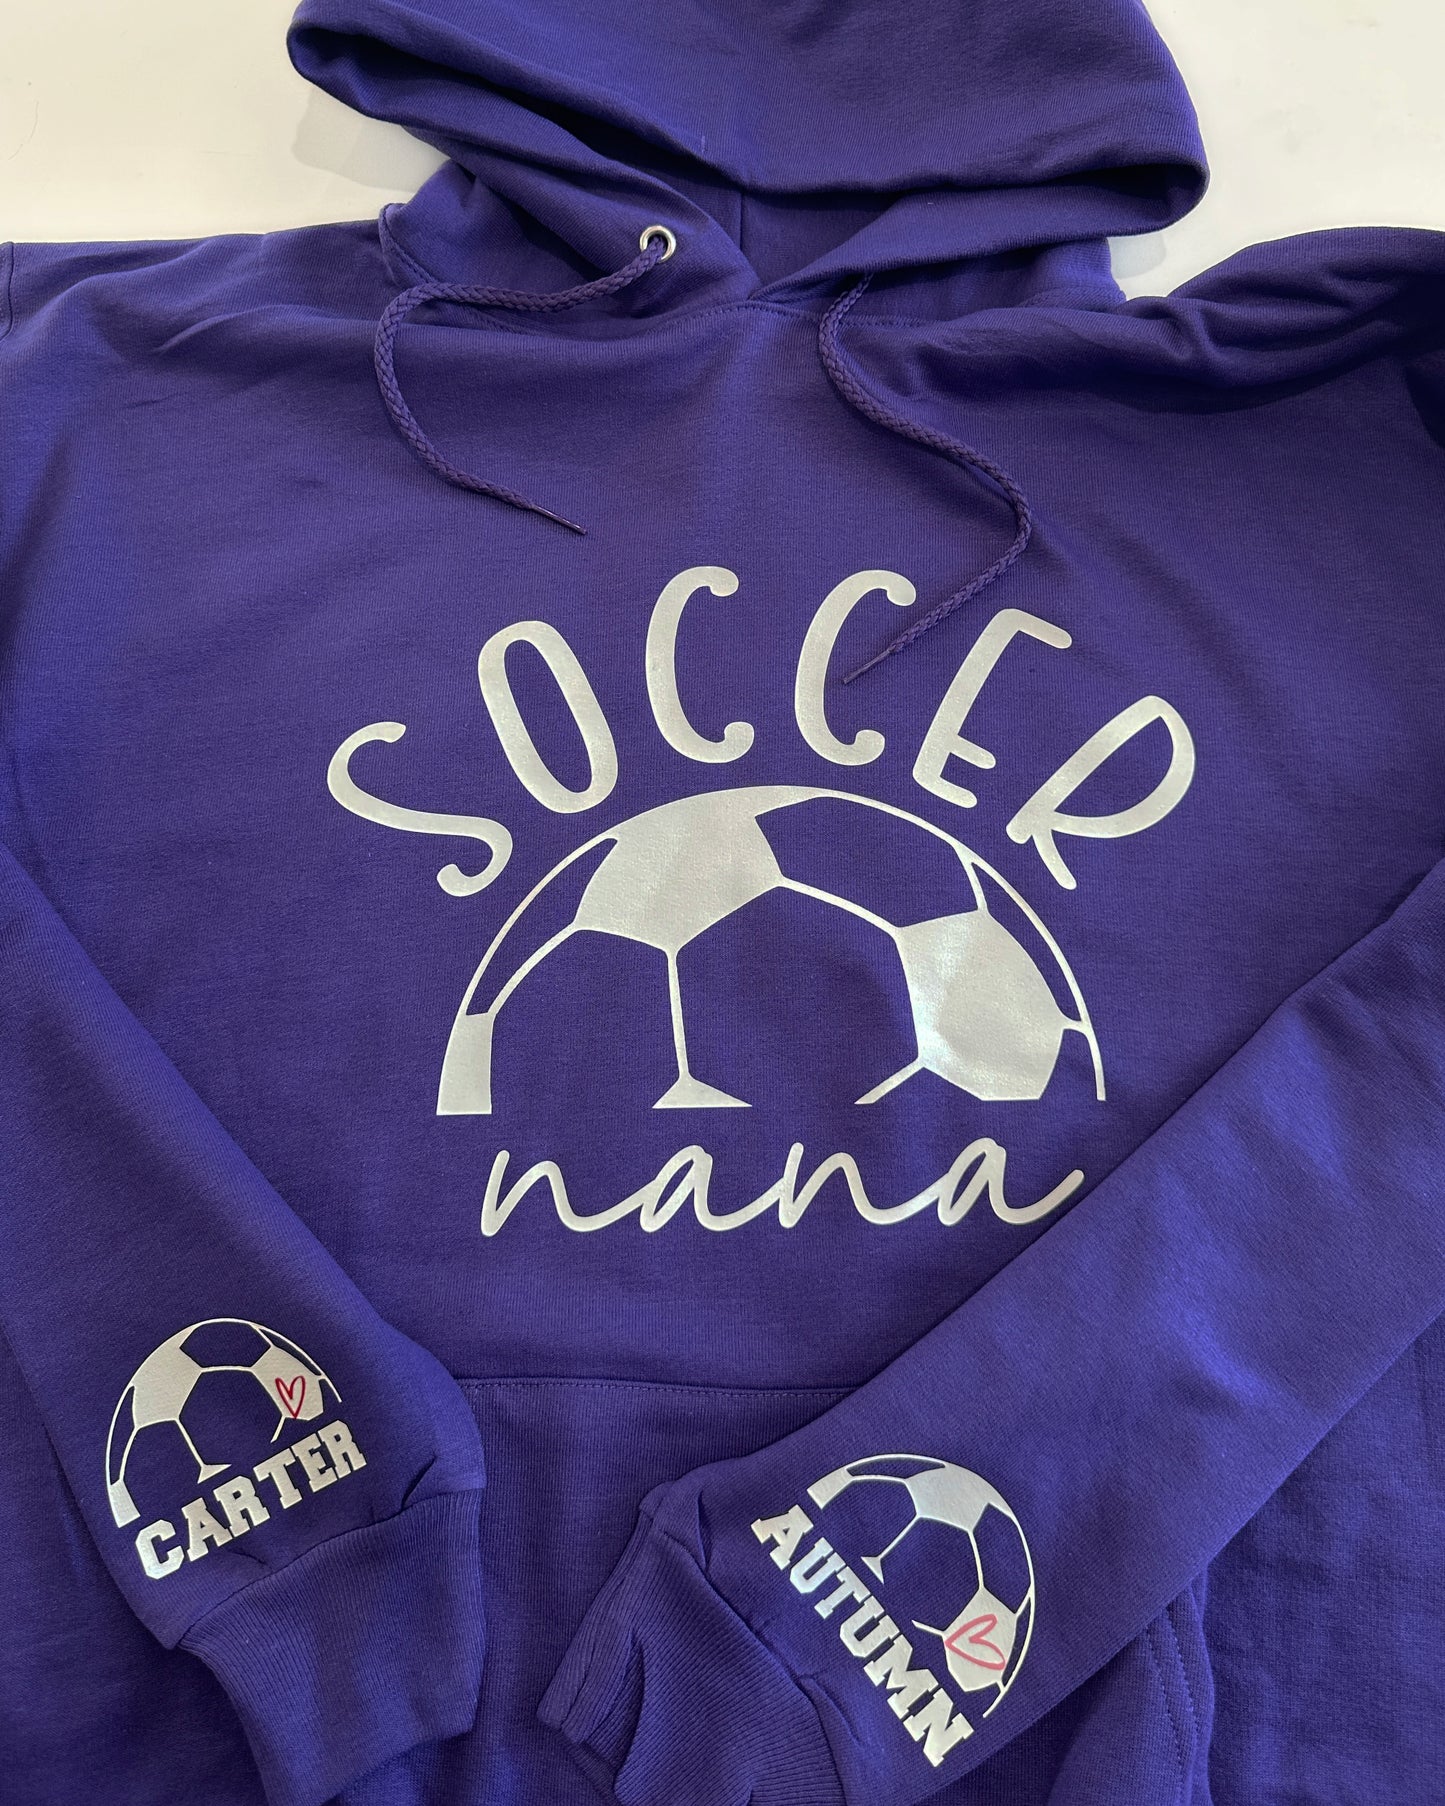 Soccer Mom Name on Sleeve